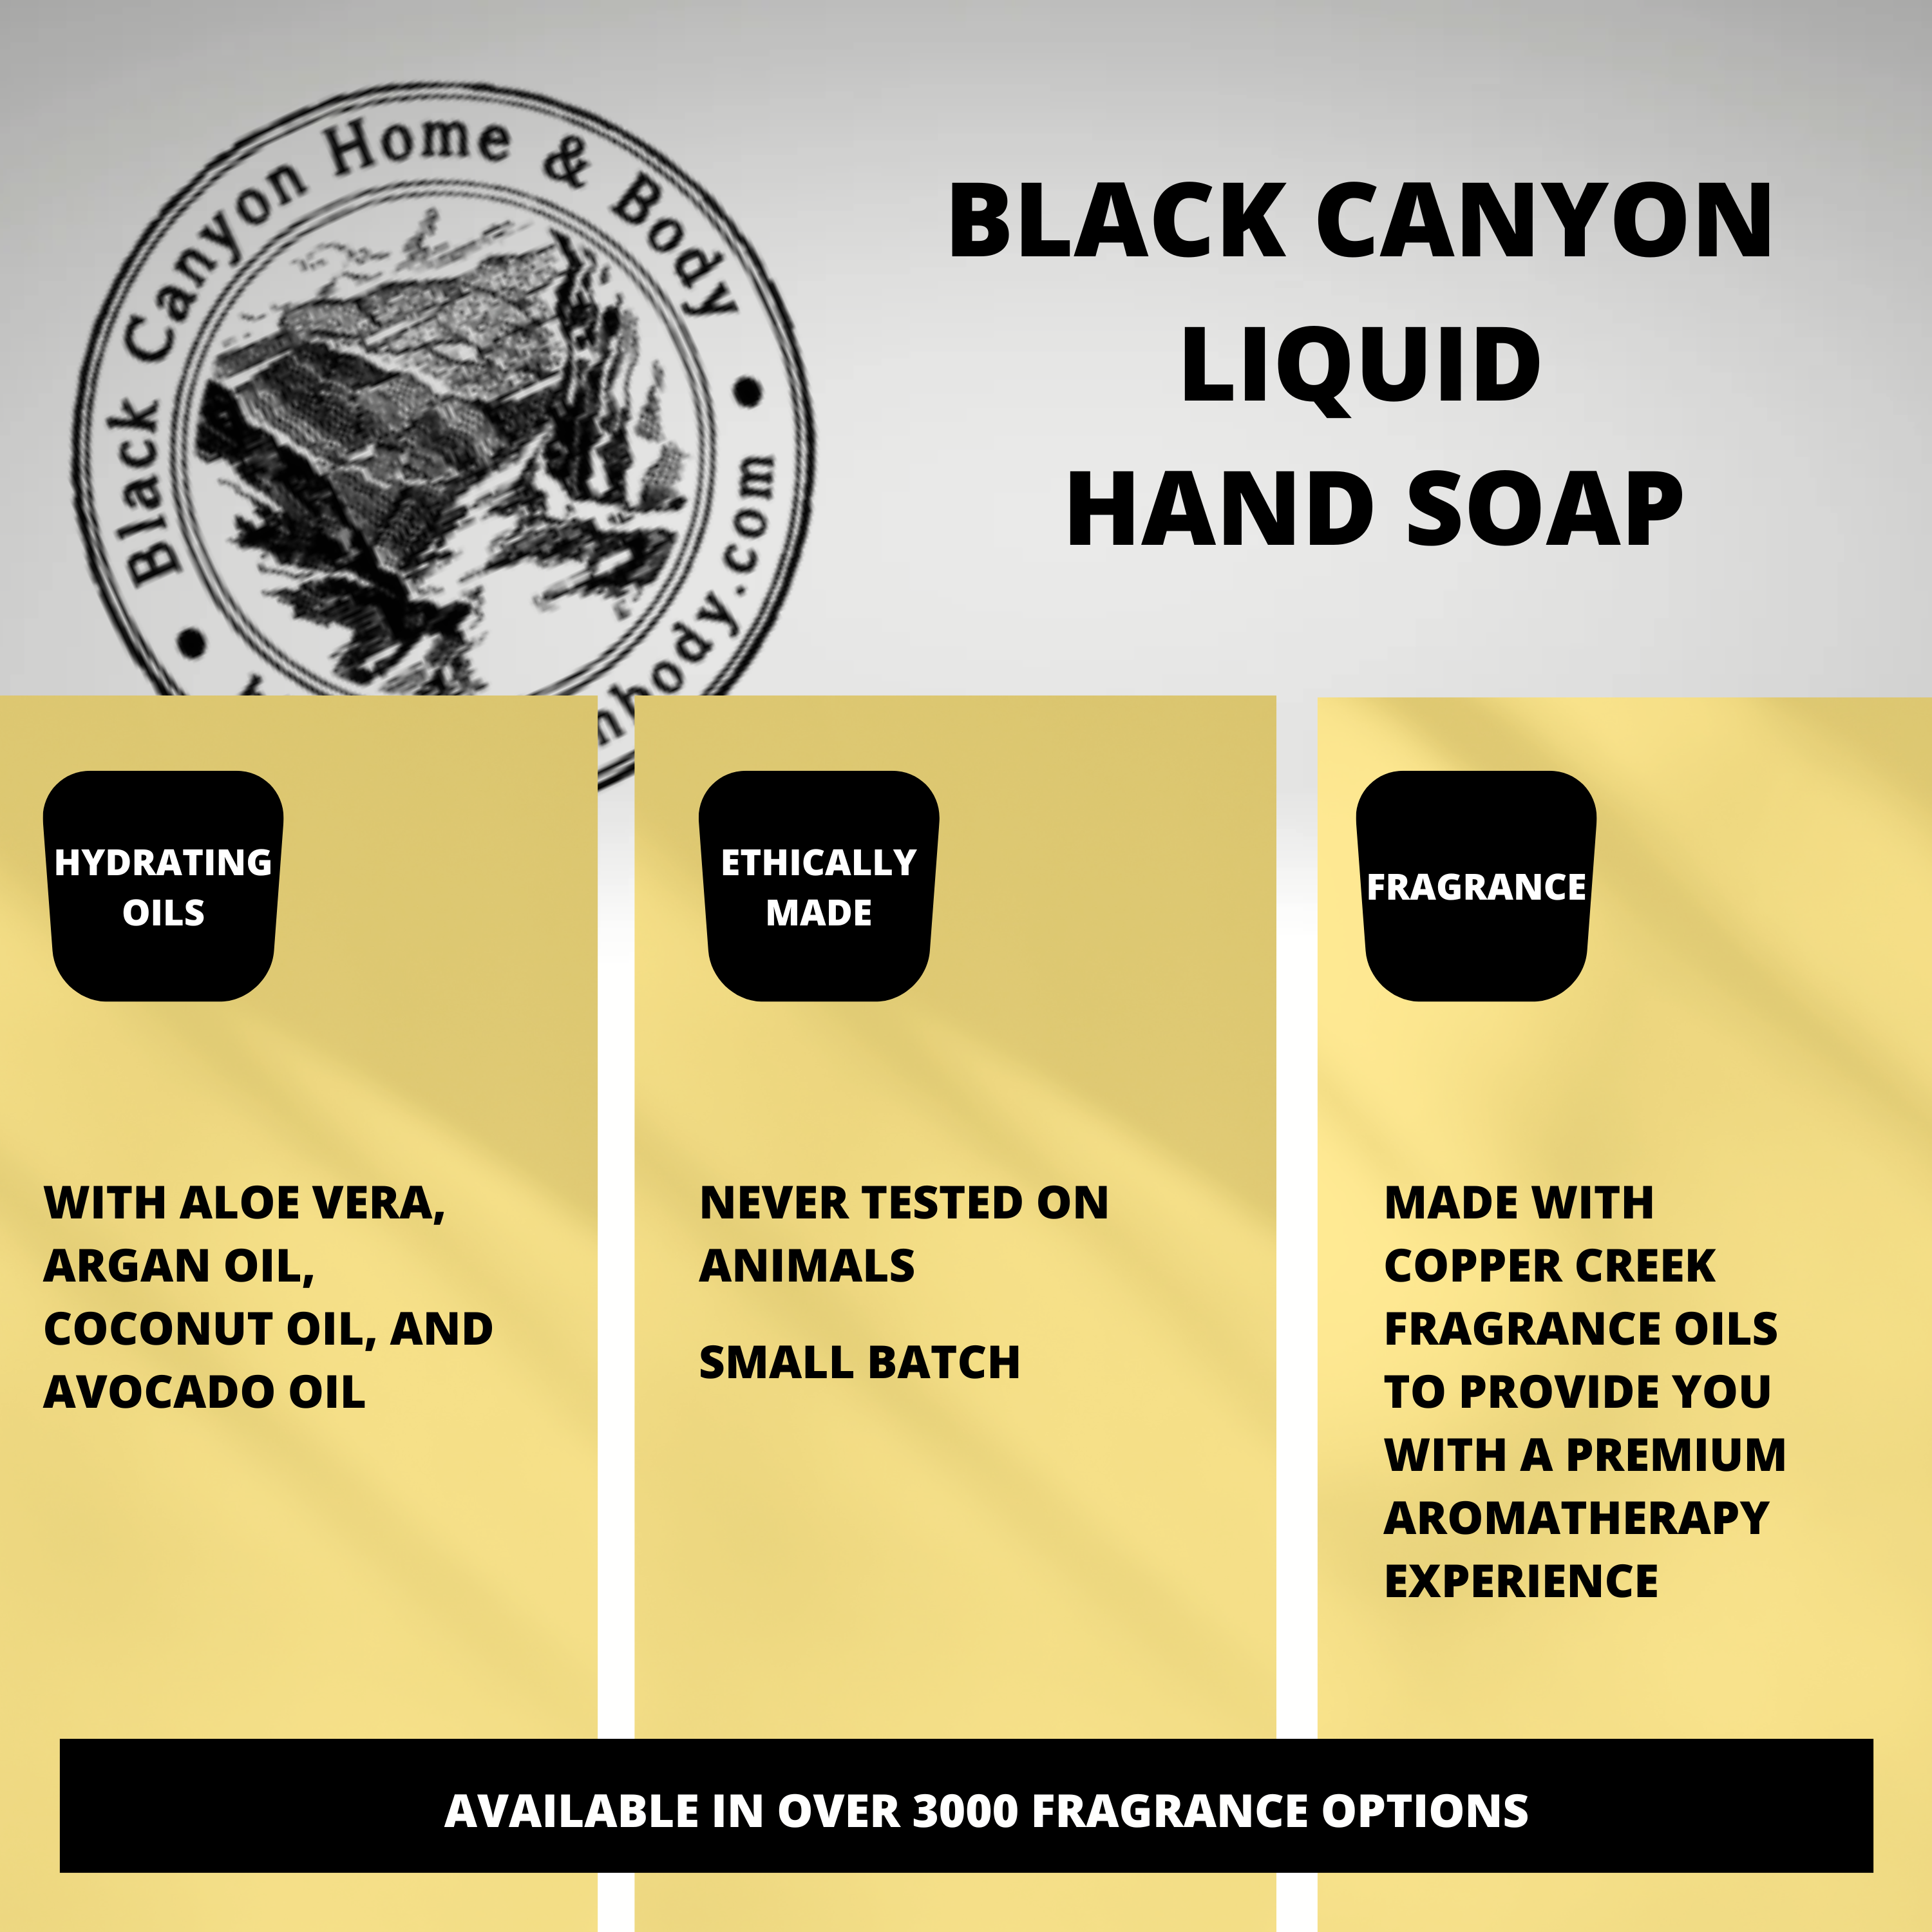 Black Canyon Hot Fudge Brownie Scented Liquid Hand Soap